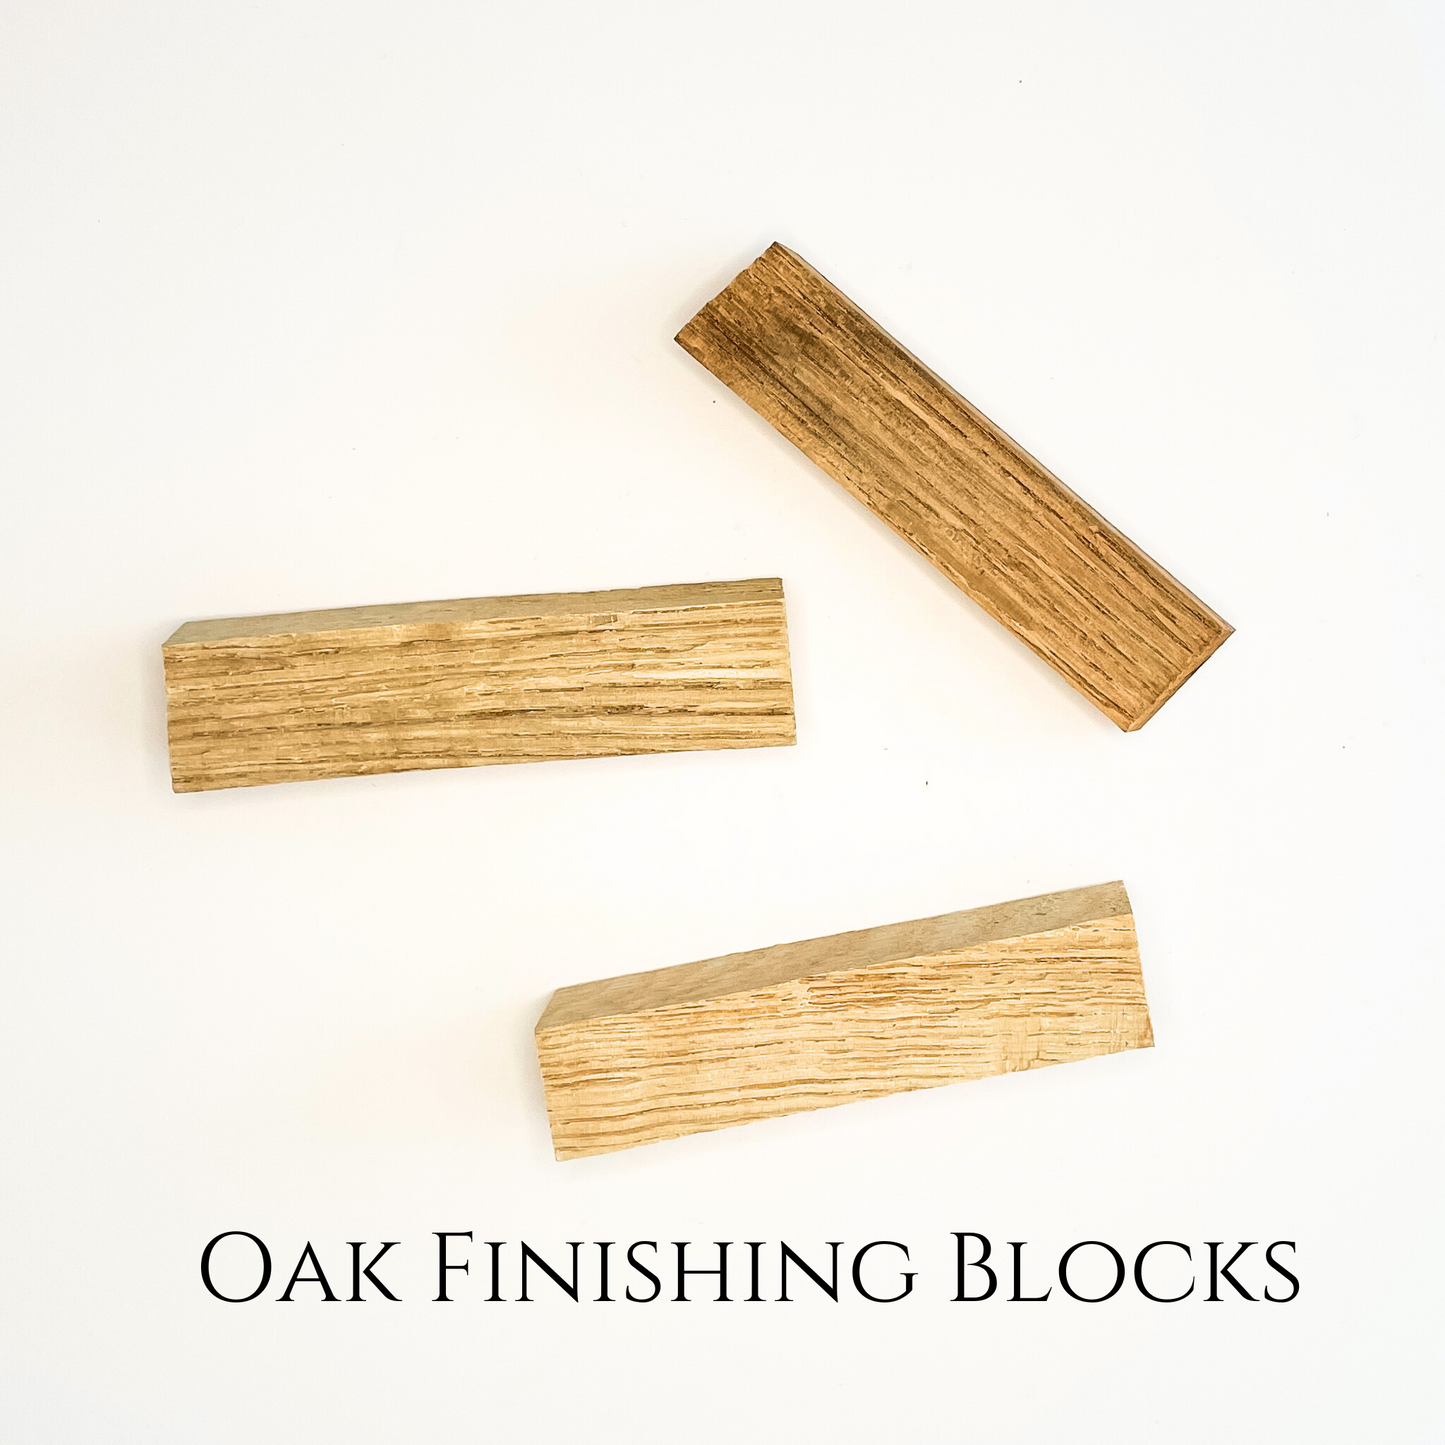 Oak Finishing Blocks